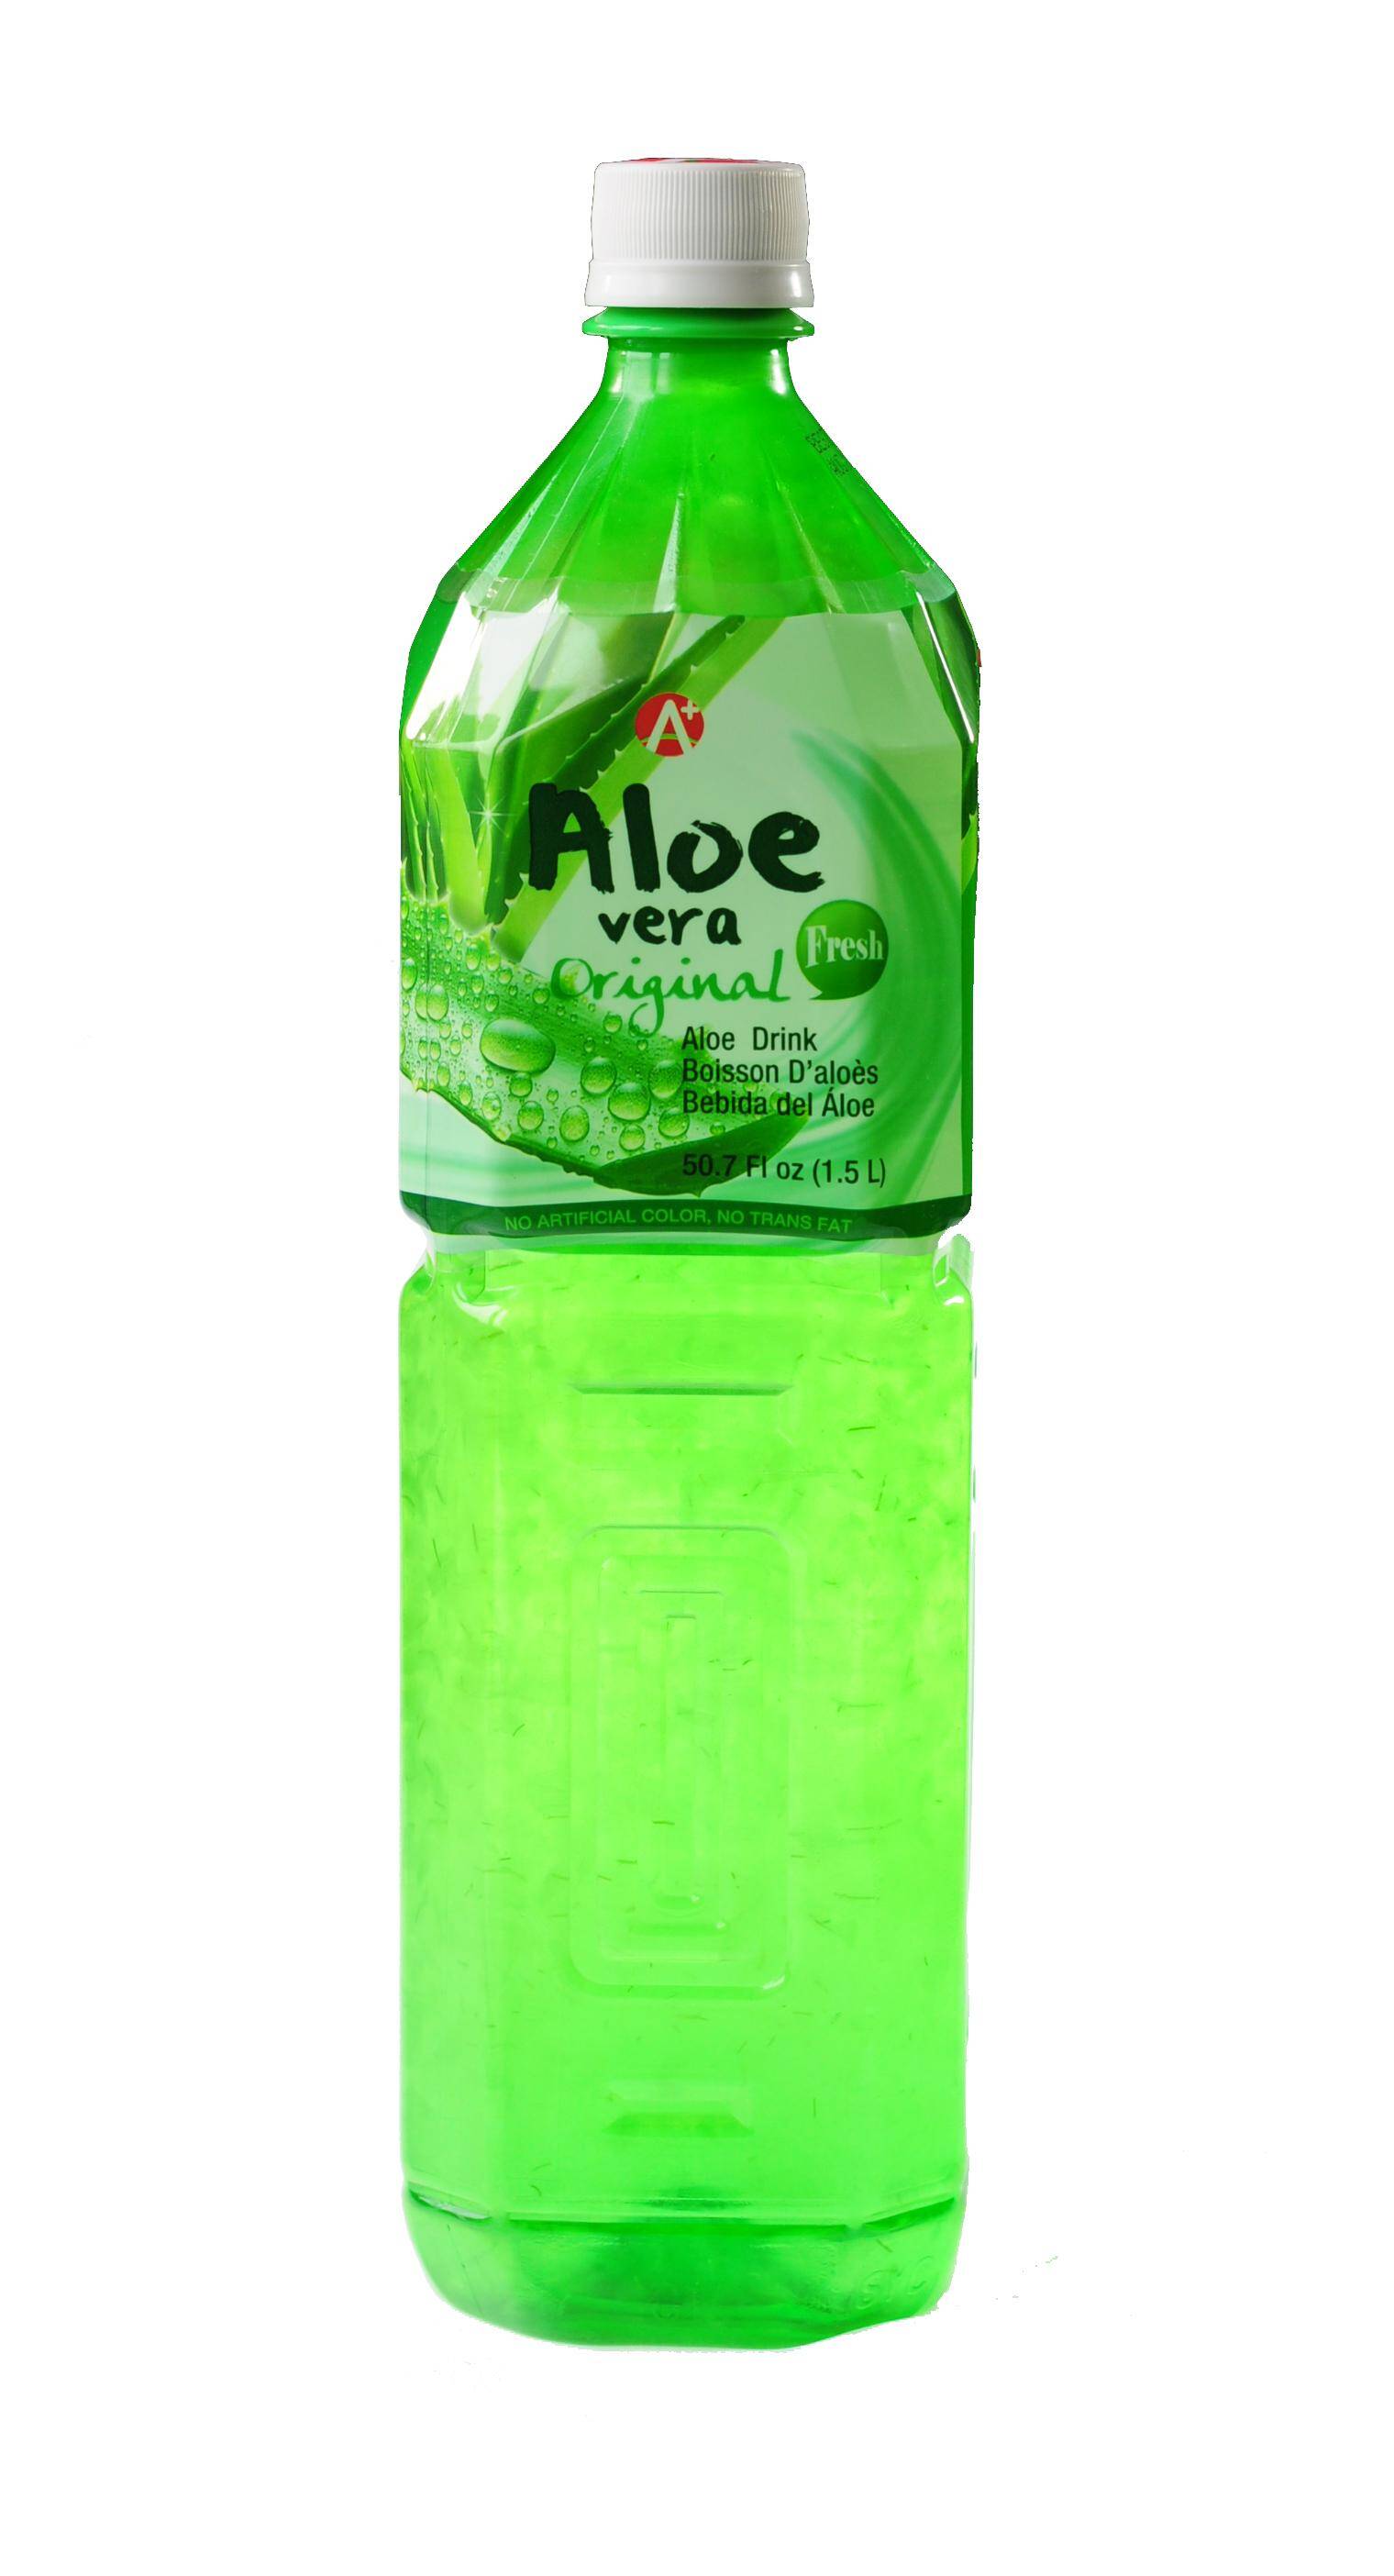 Napój aloesowy Aloe Vera Original 1,5L/12 A+